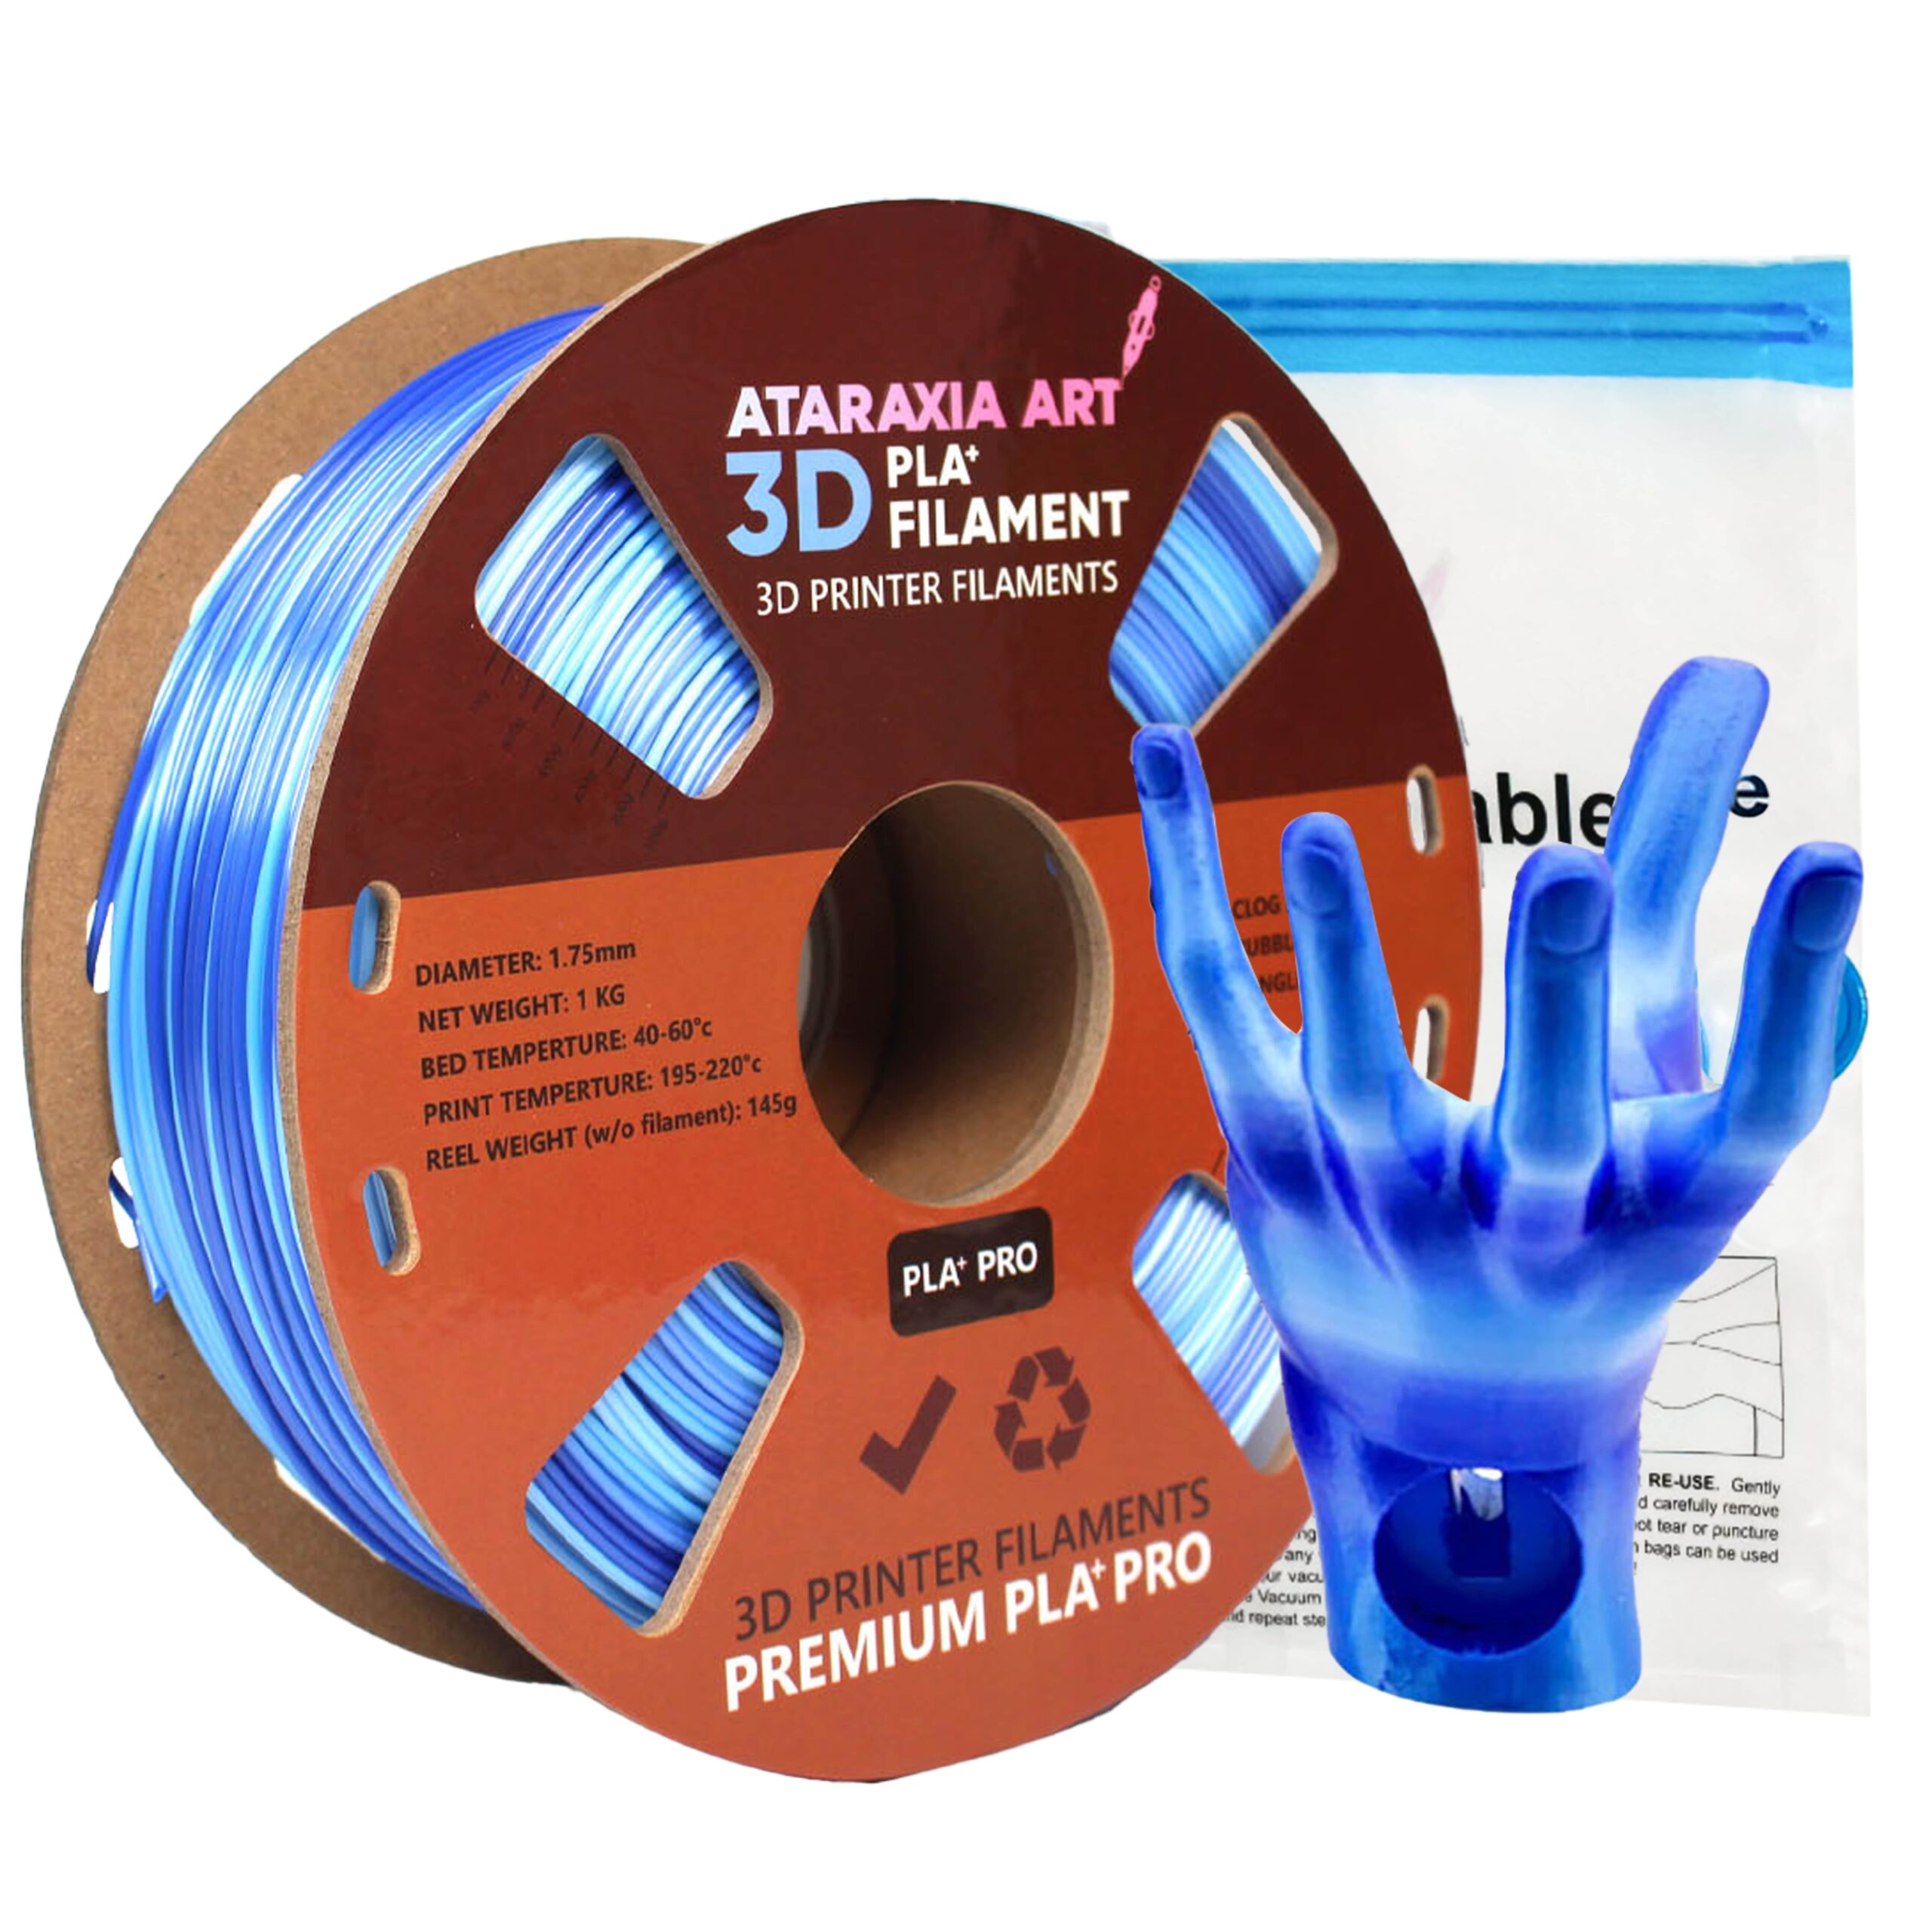 Creality Ender PLA+ 1.75mm 1KG Eco PLA Filament - Blue